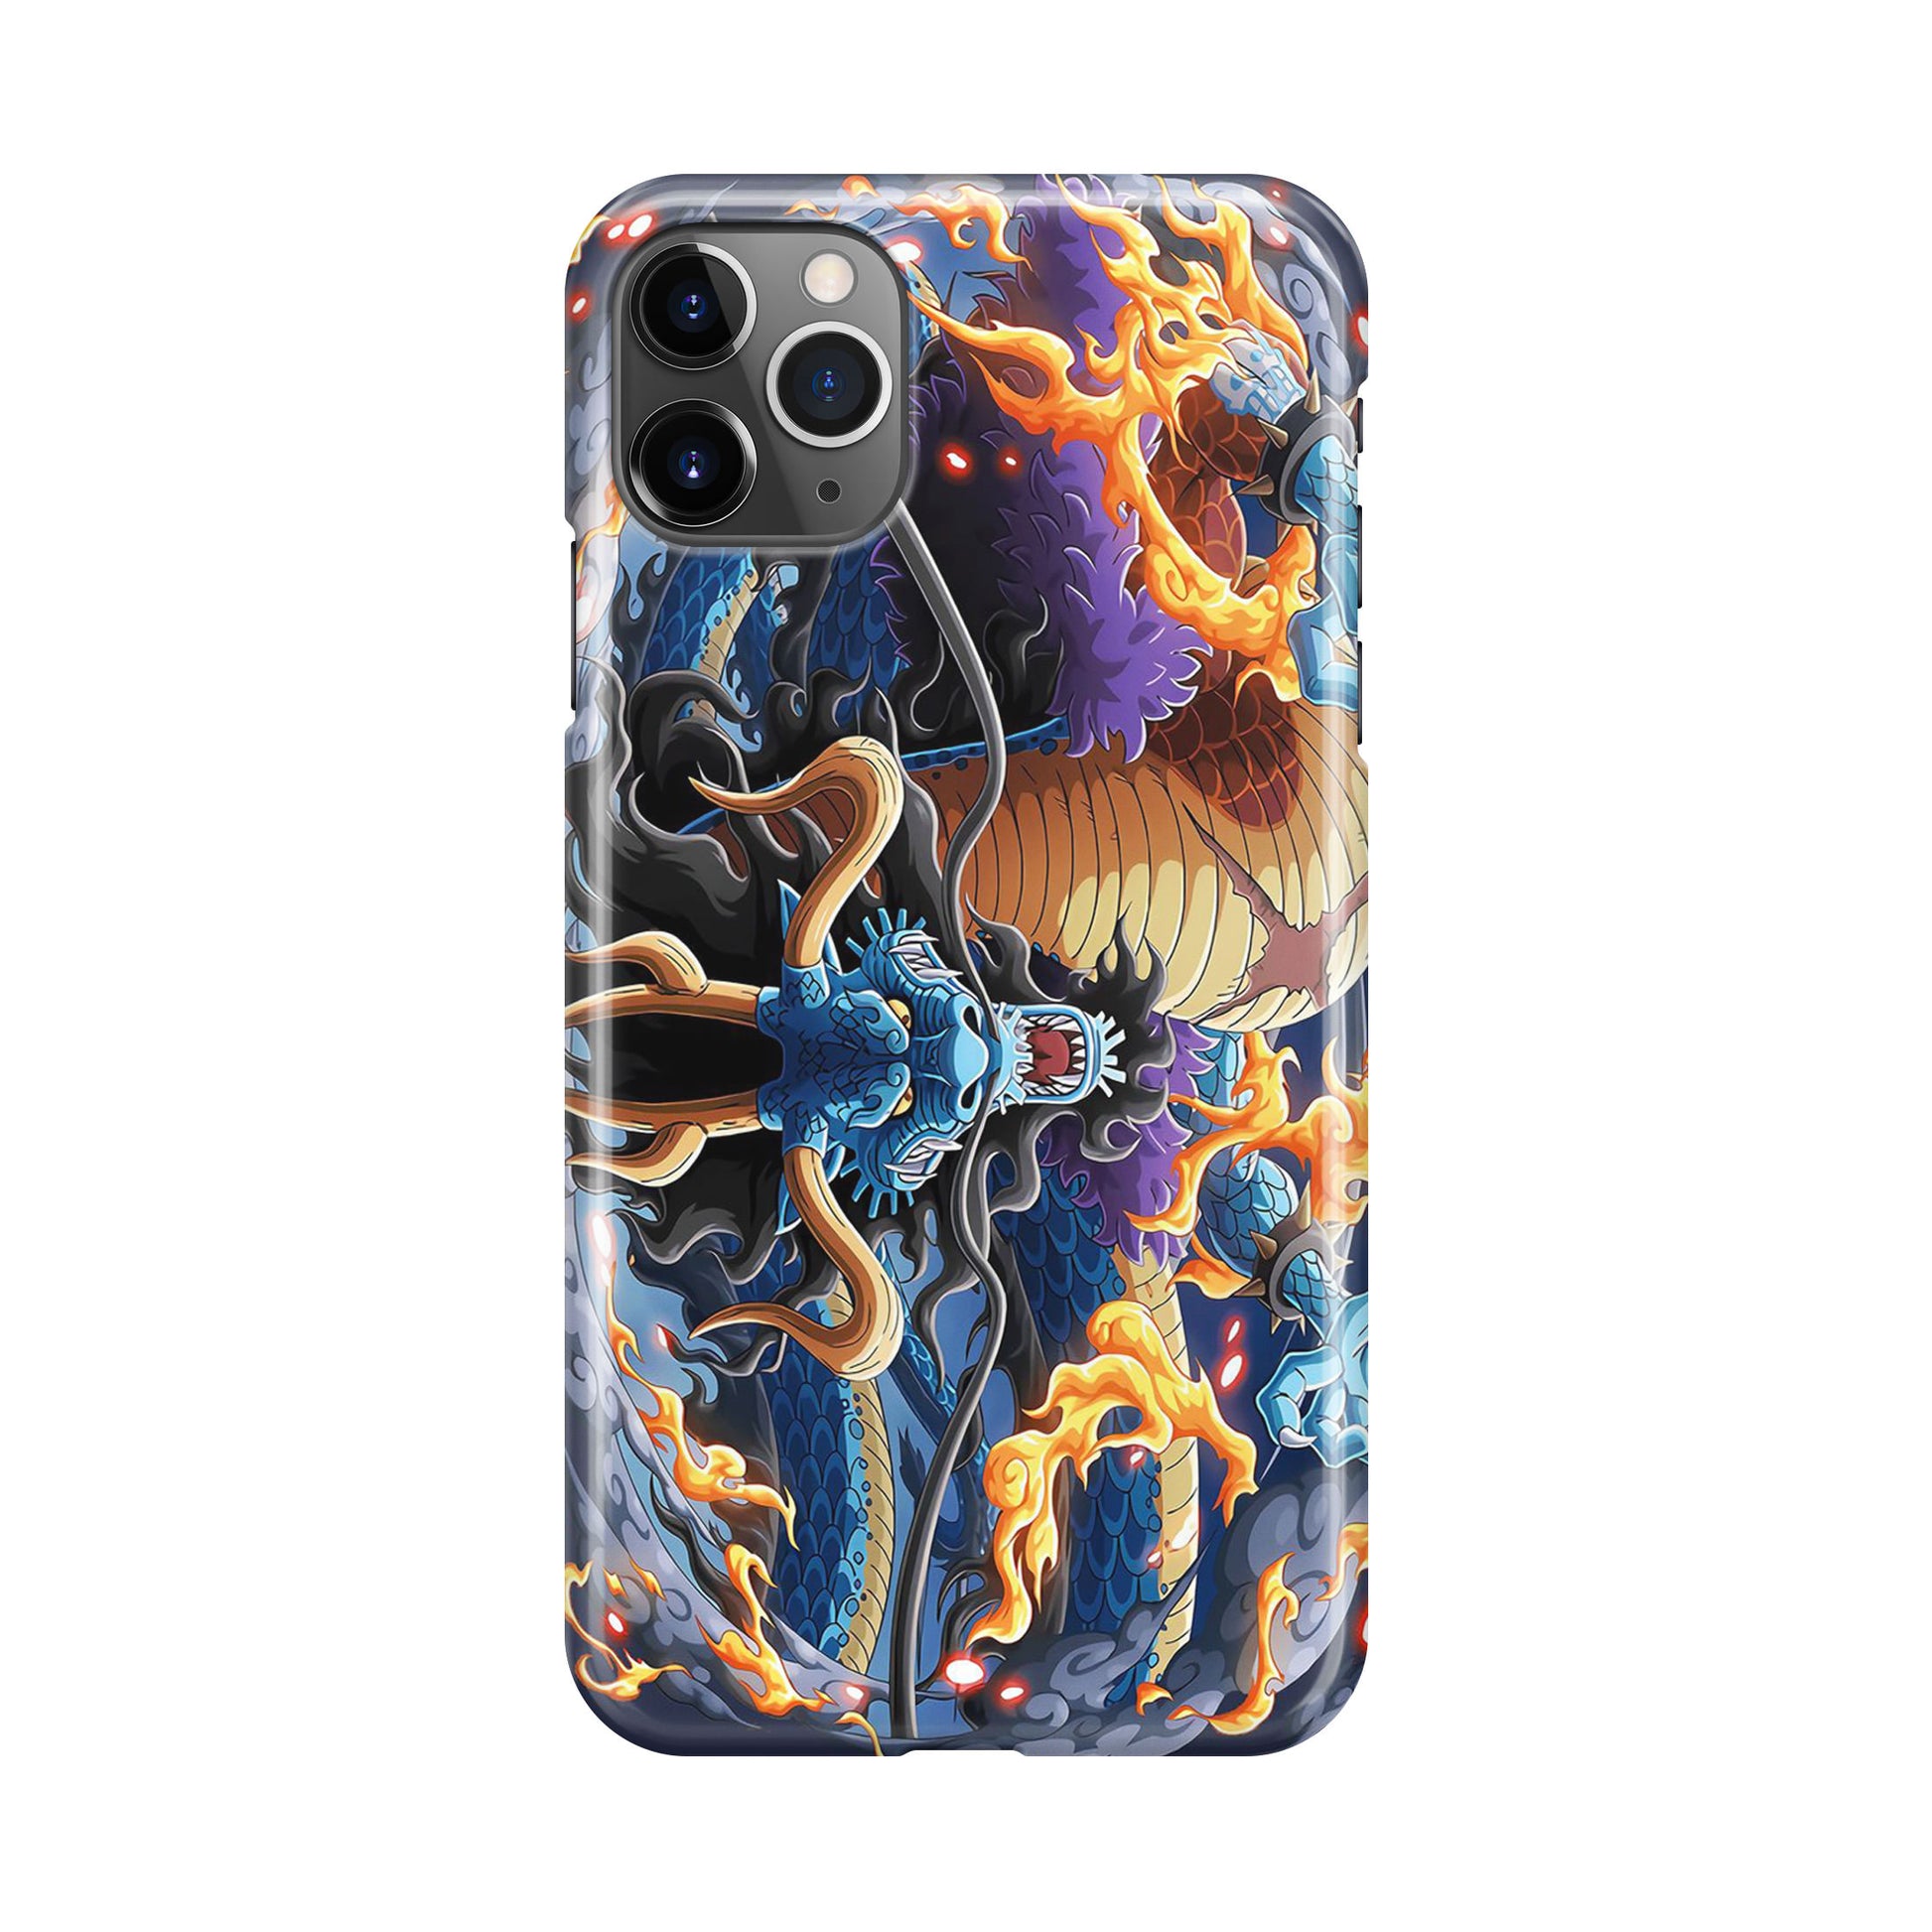 Kaido The Dragon iPhone 11 Pro Max Case